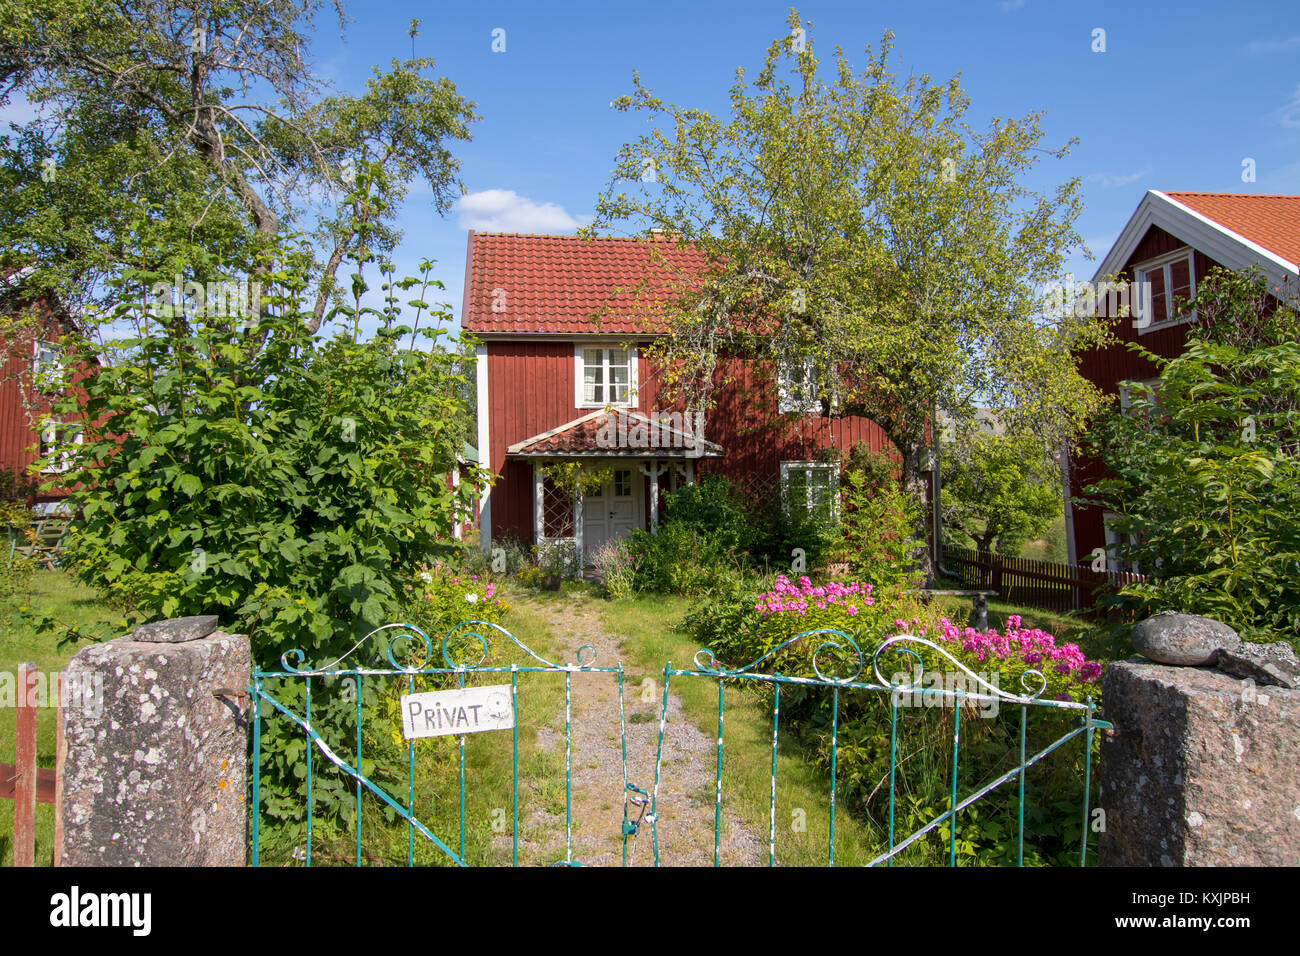 The houses of Bullerbyn in Sevedstorp, Sweden. Stock Photo